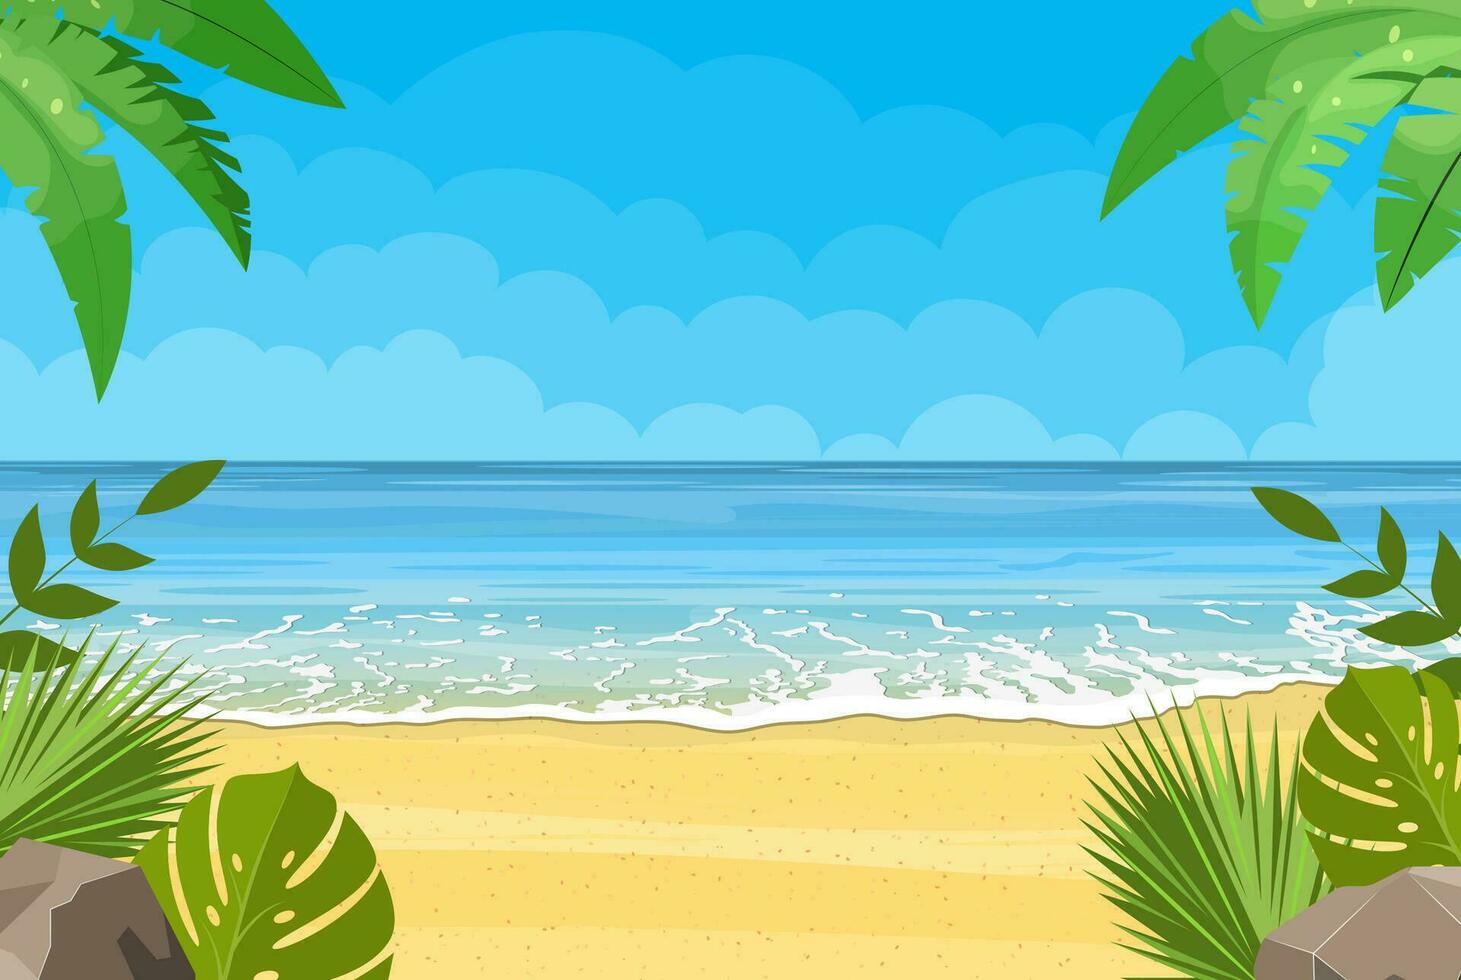 Tropical beach. Summer landscape. Sandy beach under the bright sun. Vector illustration in flat style